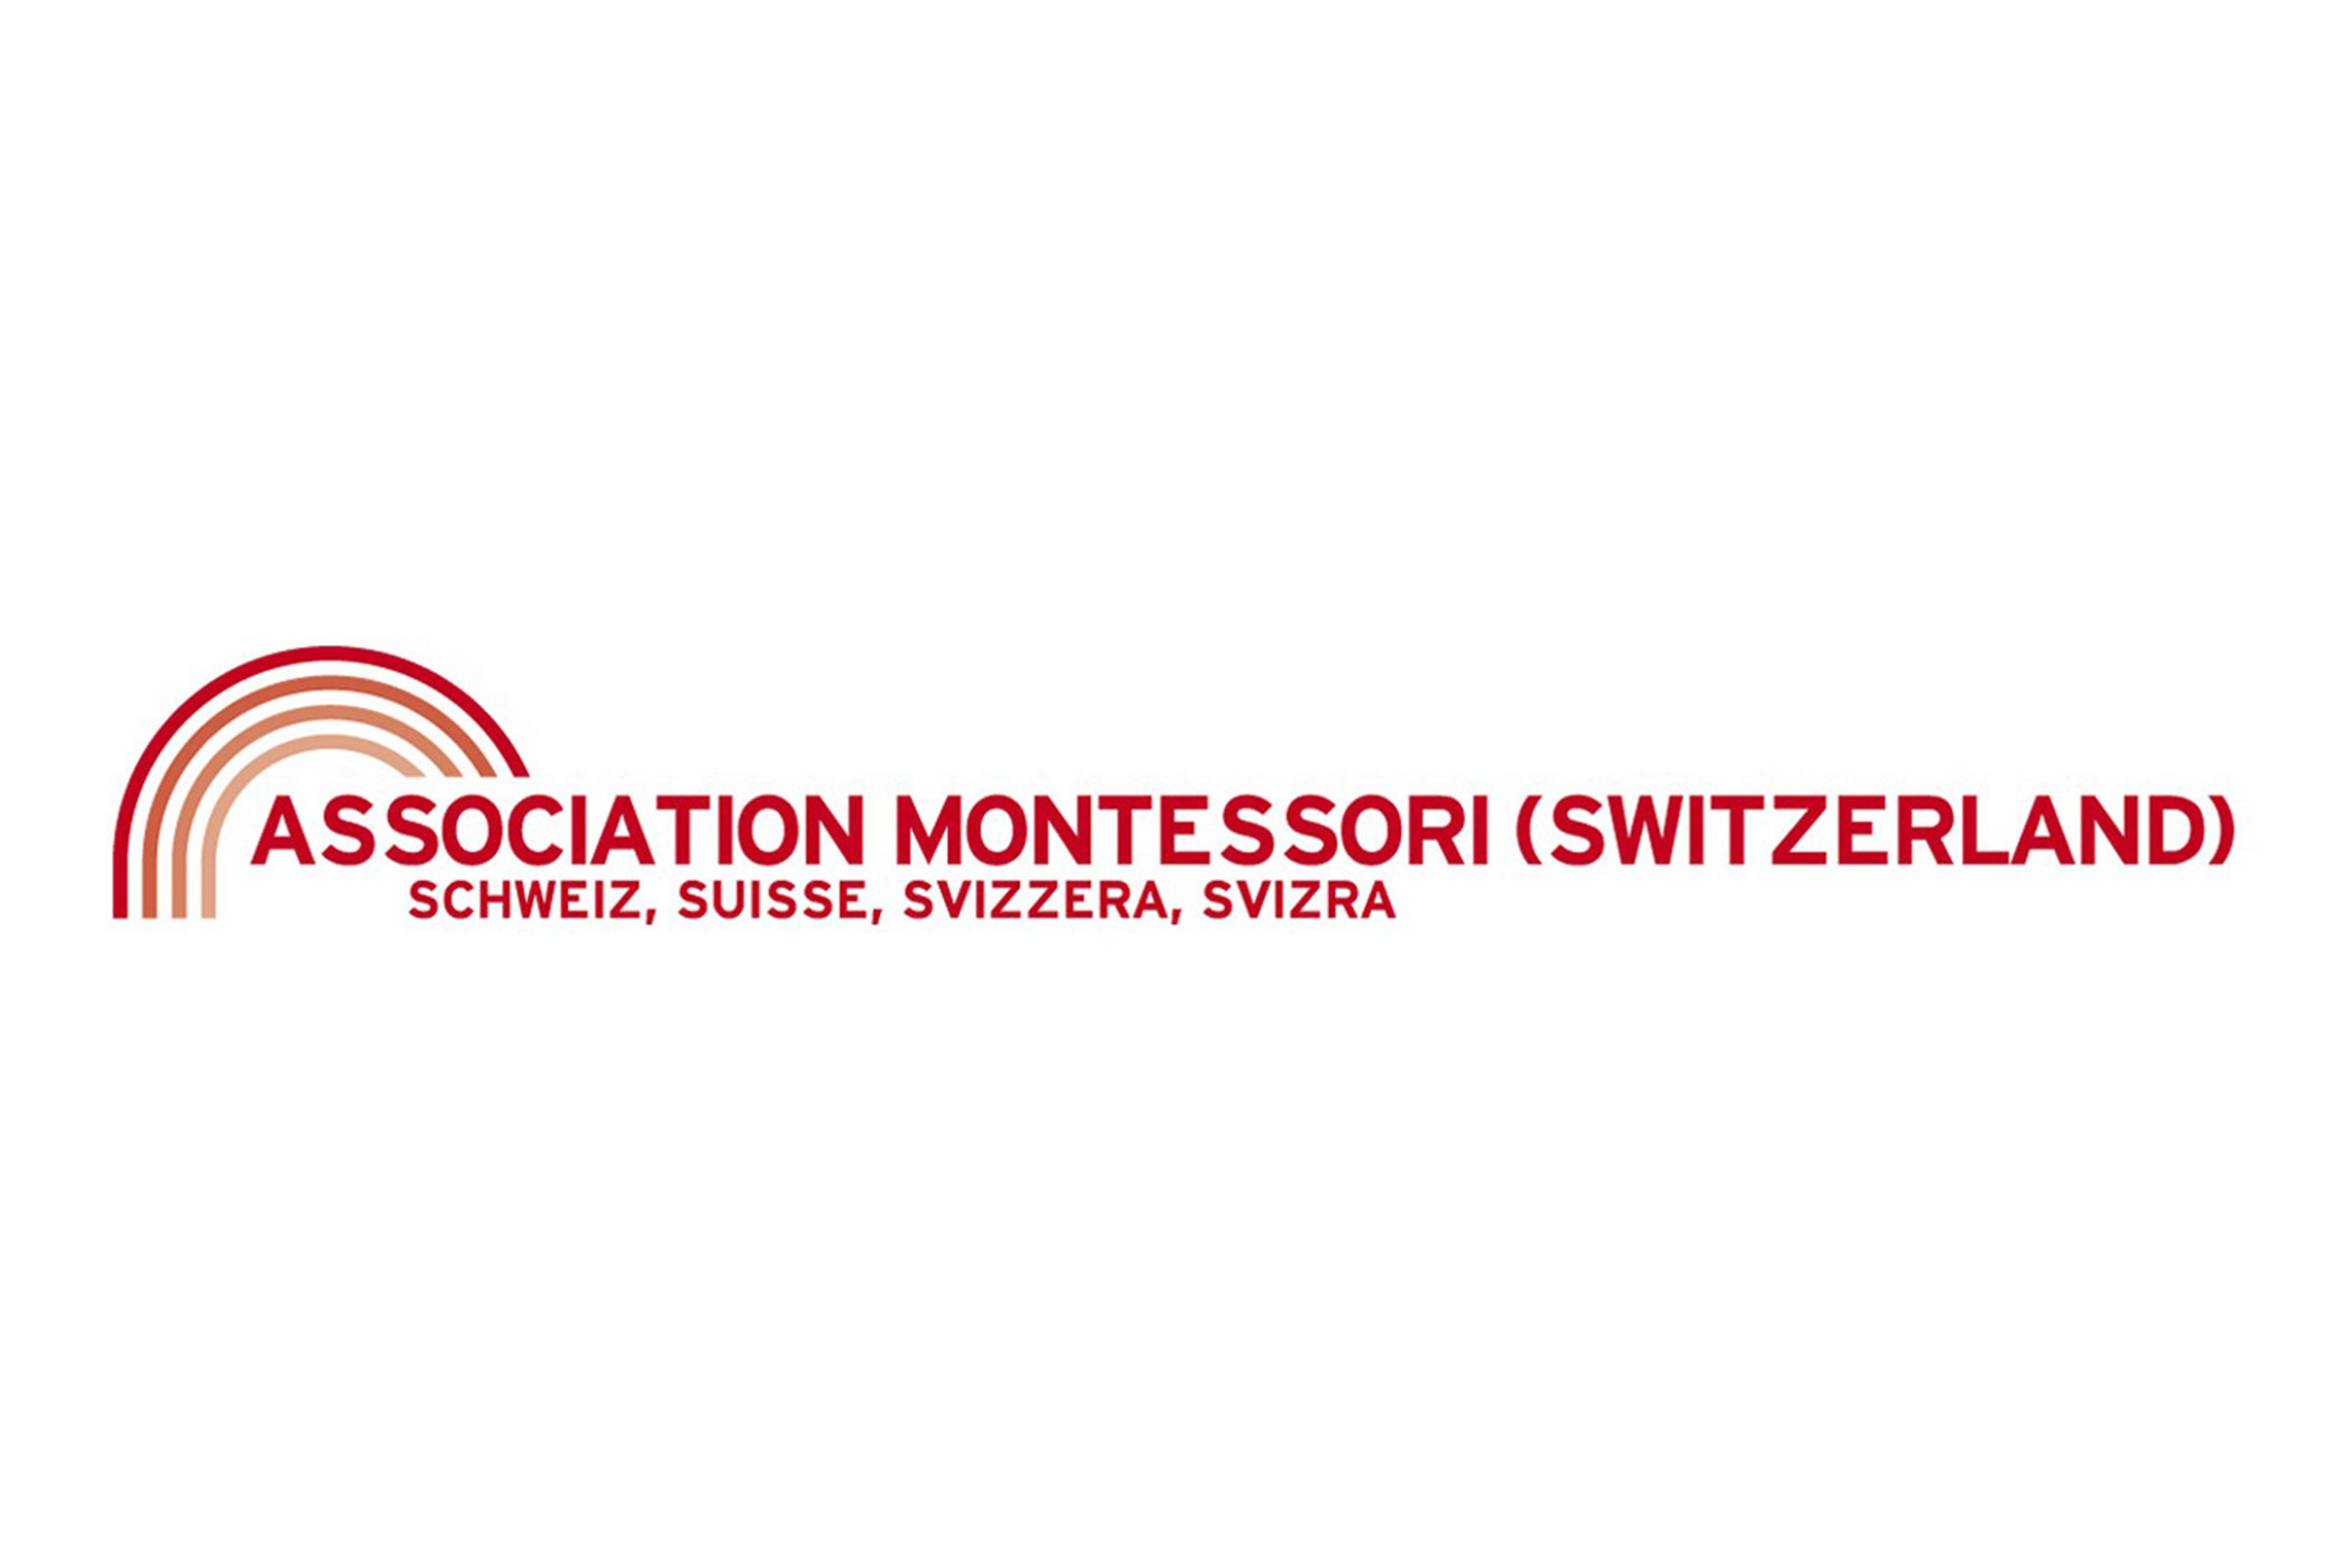 Association Montessori Switzerland logo